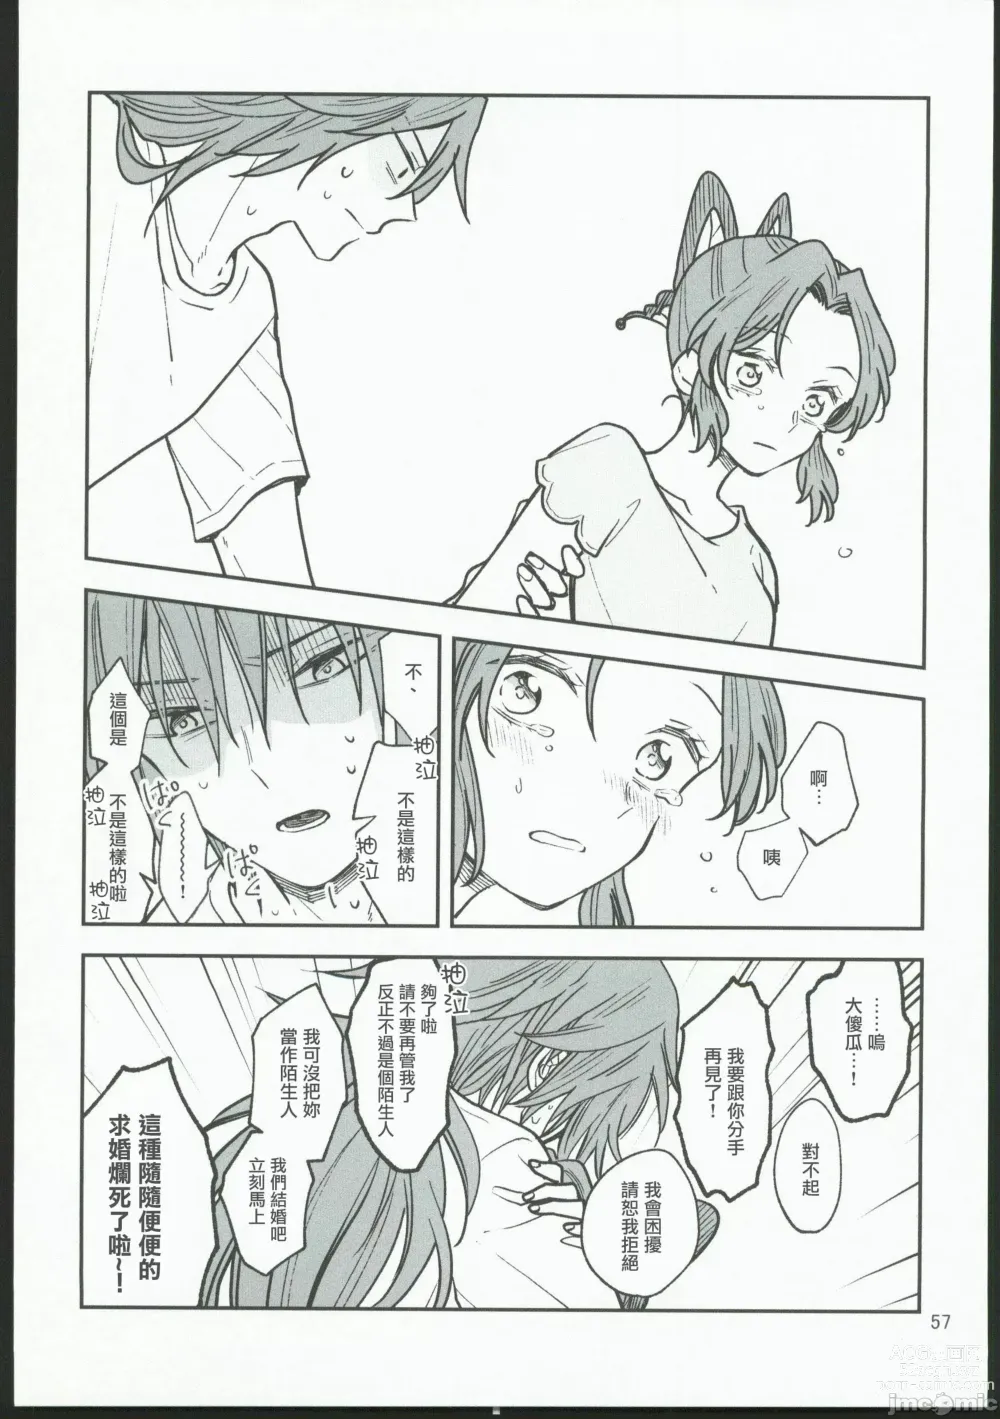 Page 56 of doujinshi Koi Tsumugi